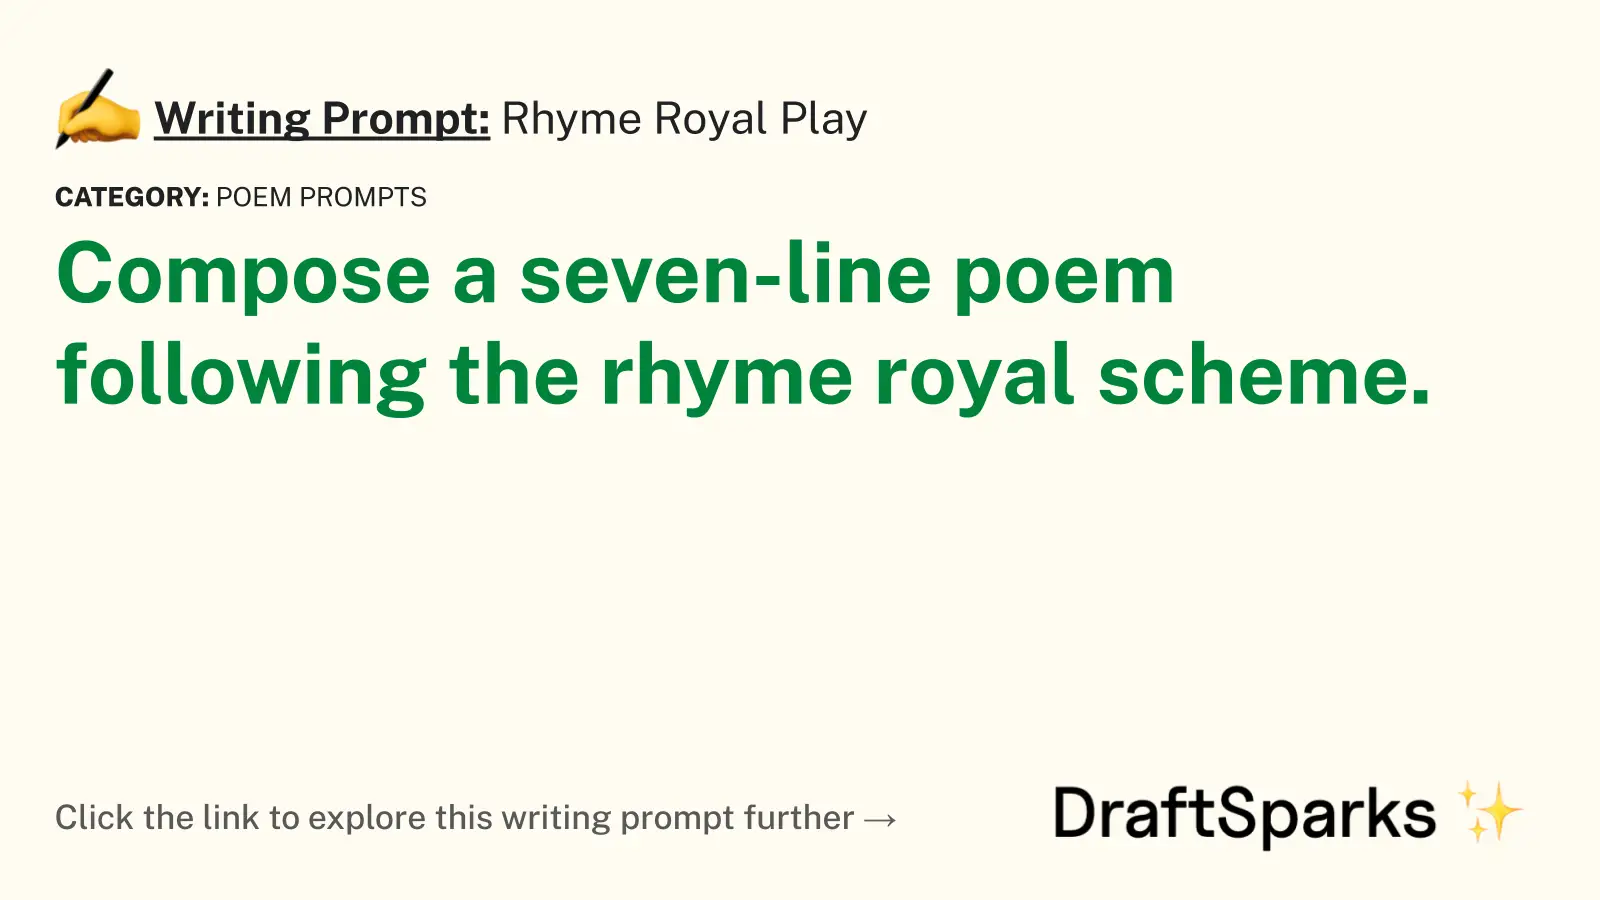 Rhyme Royal Play